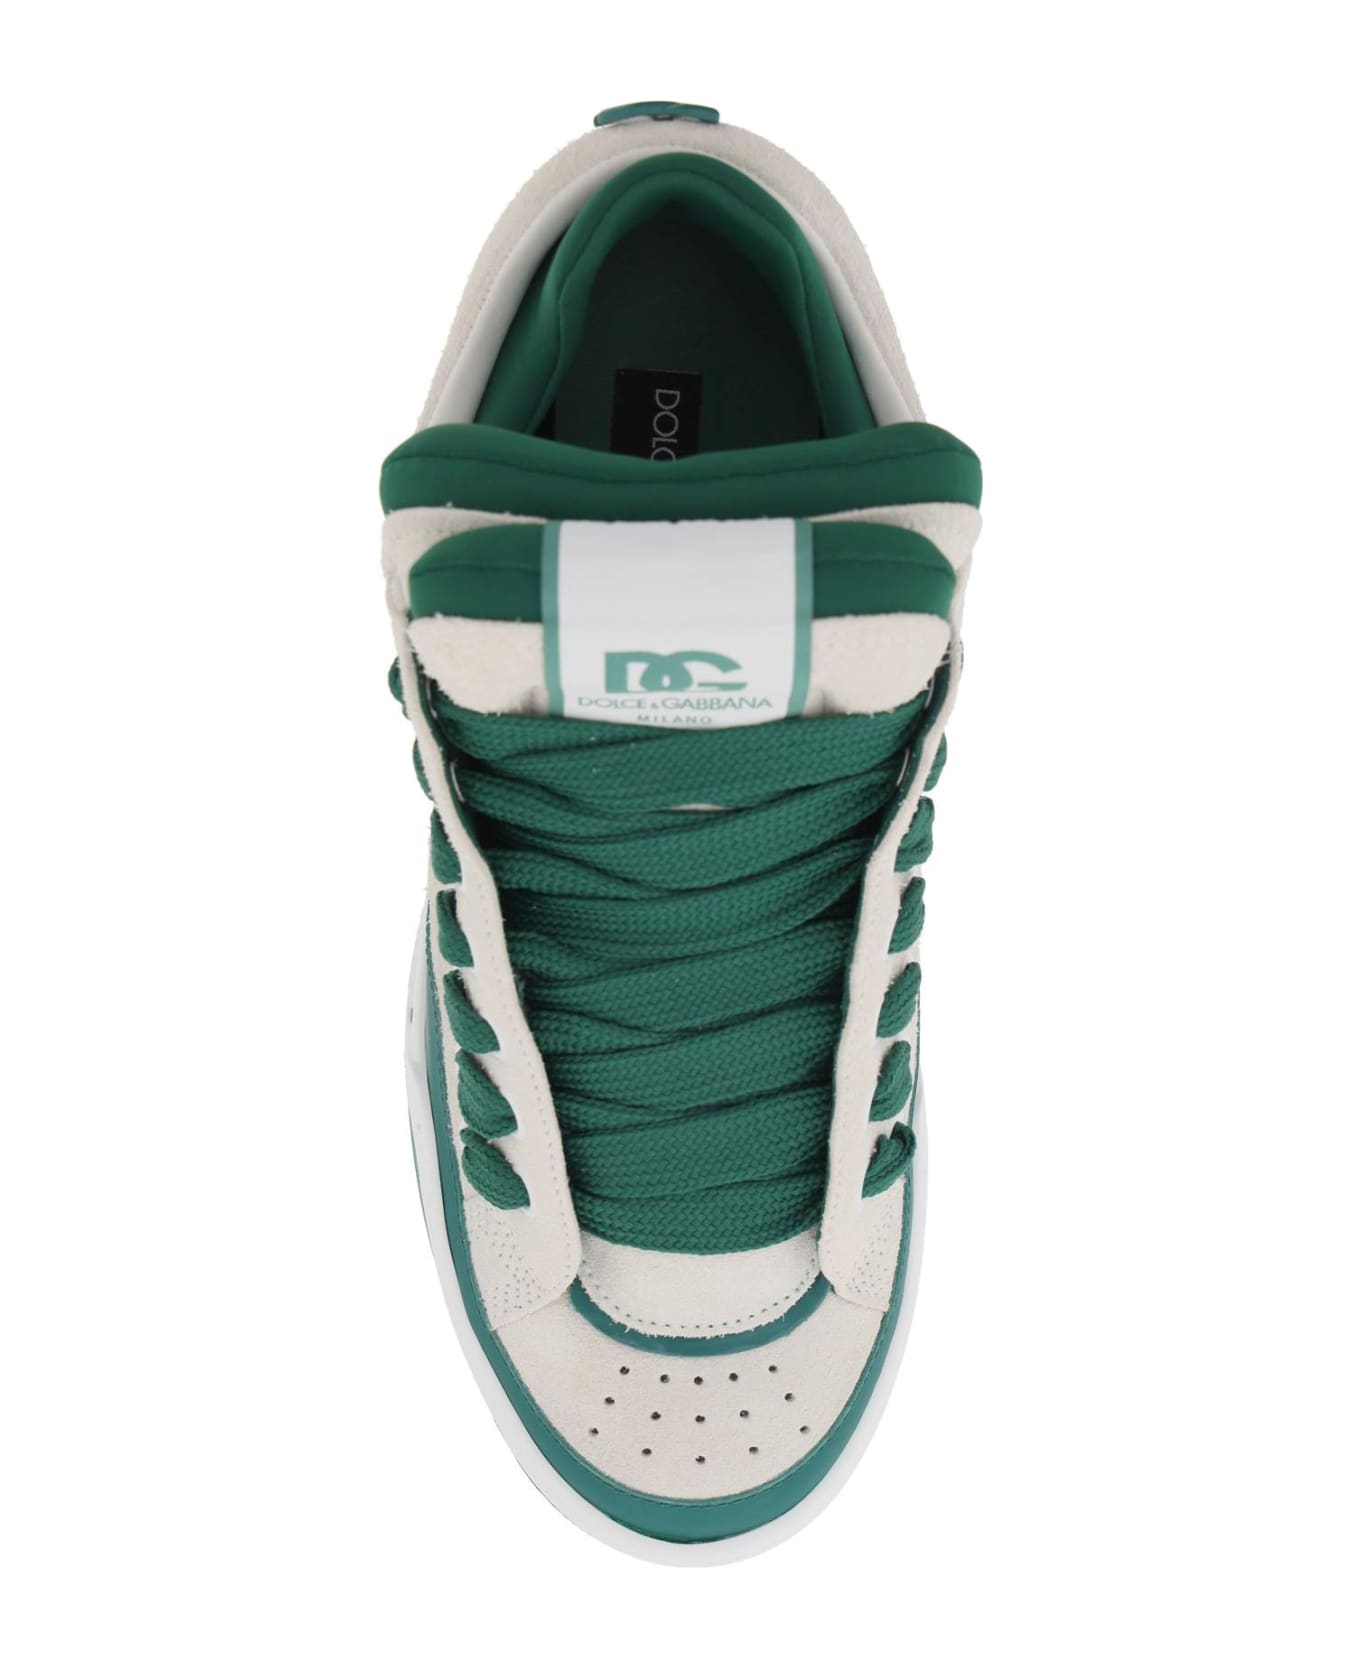 Dolce & Gabbana Sneakers - Verde smeraldo スニーカー